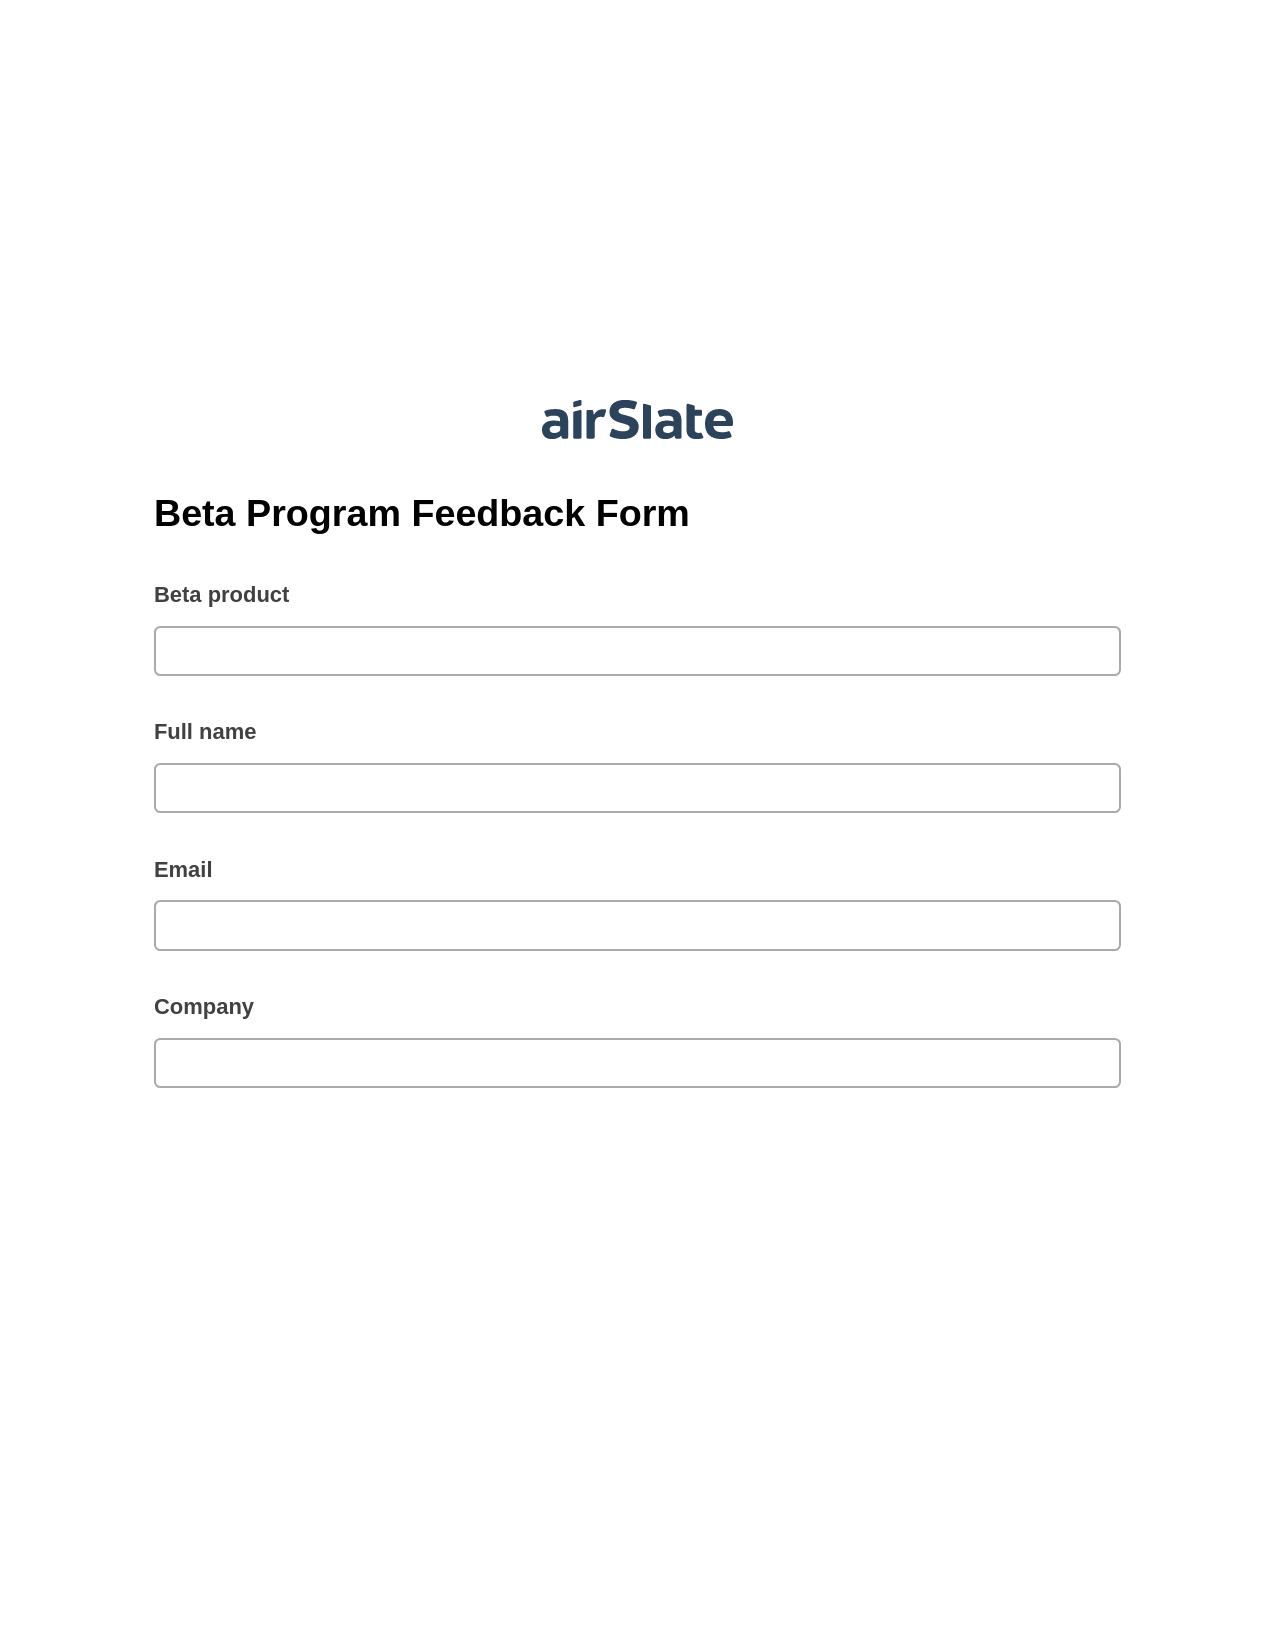 Beta Program Feedback Form Pre-fill from CSV File Bot, Update Salesforce Record Bot, Export to Google Sheet Bot